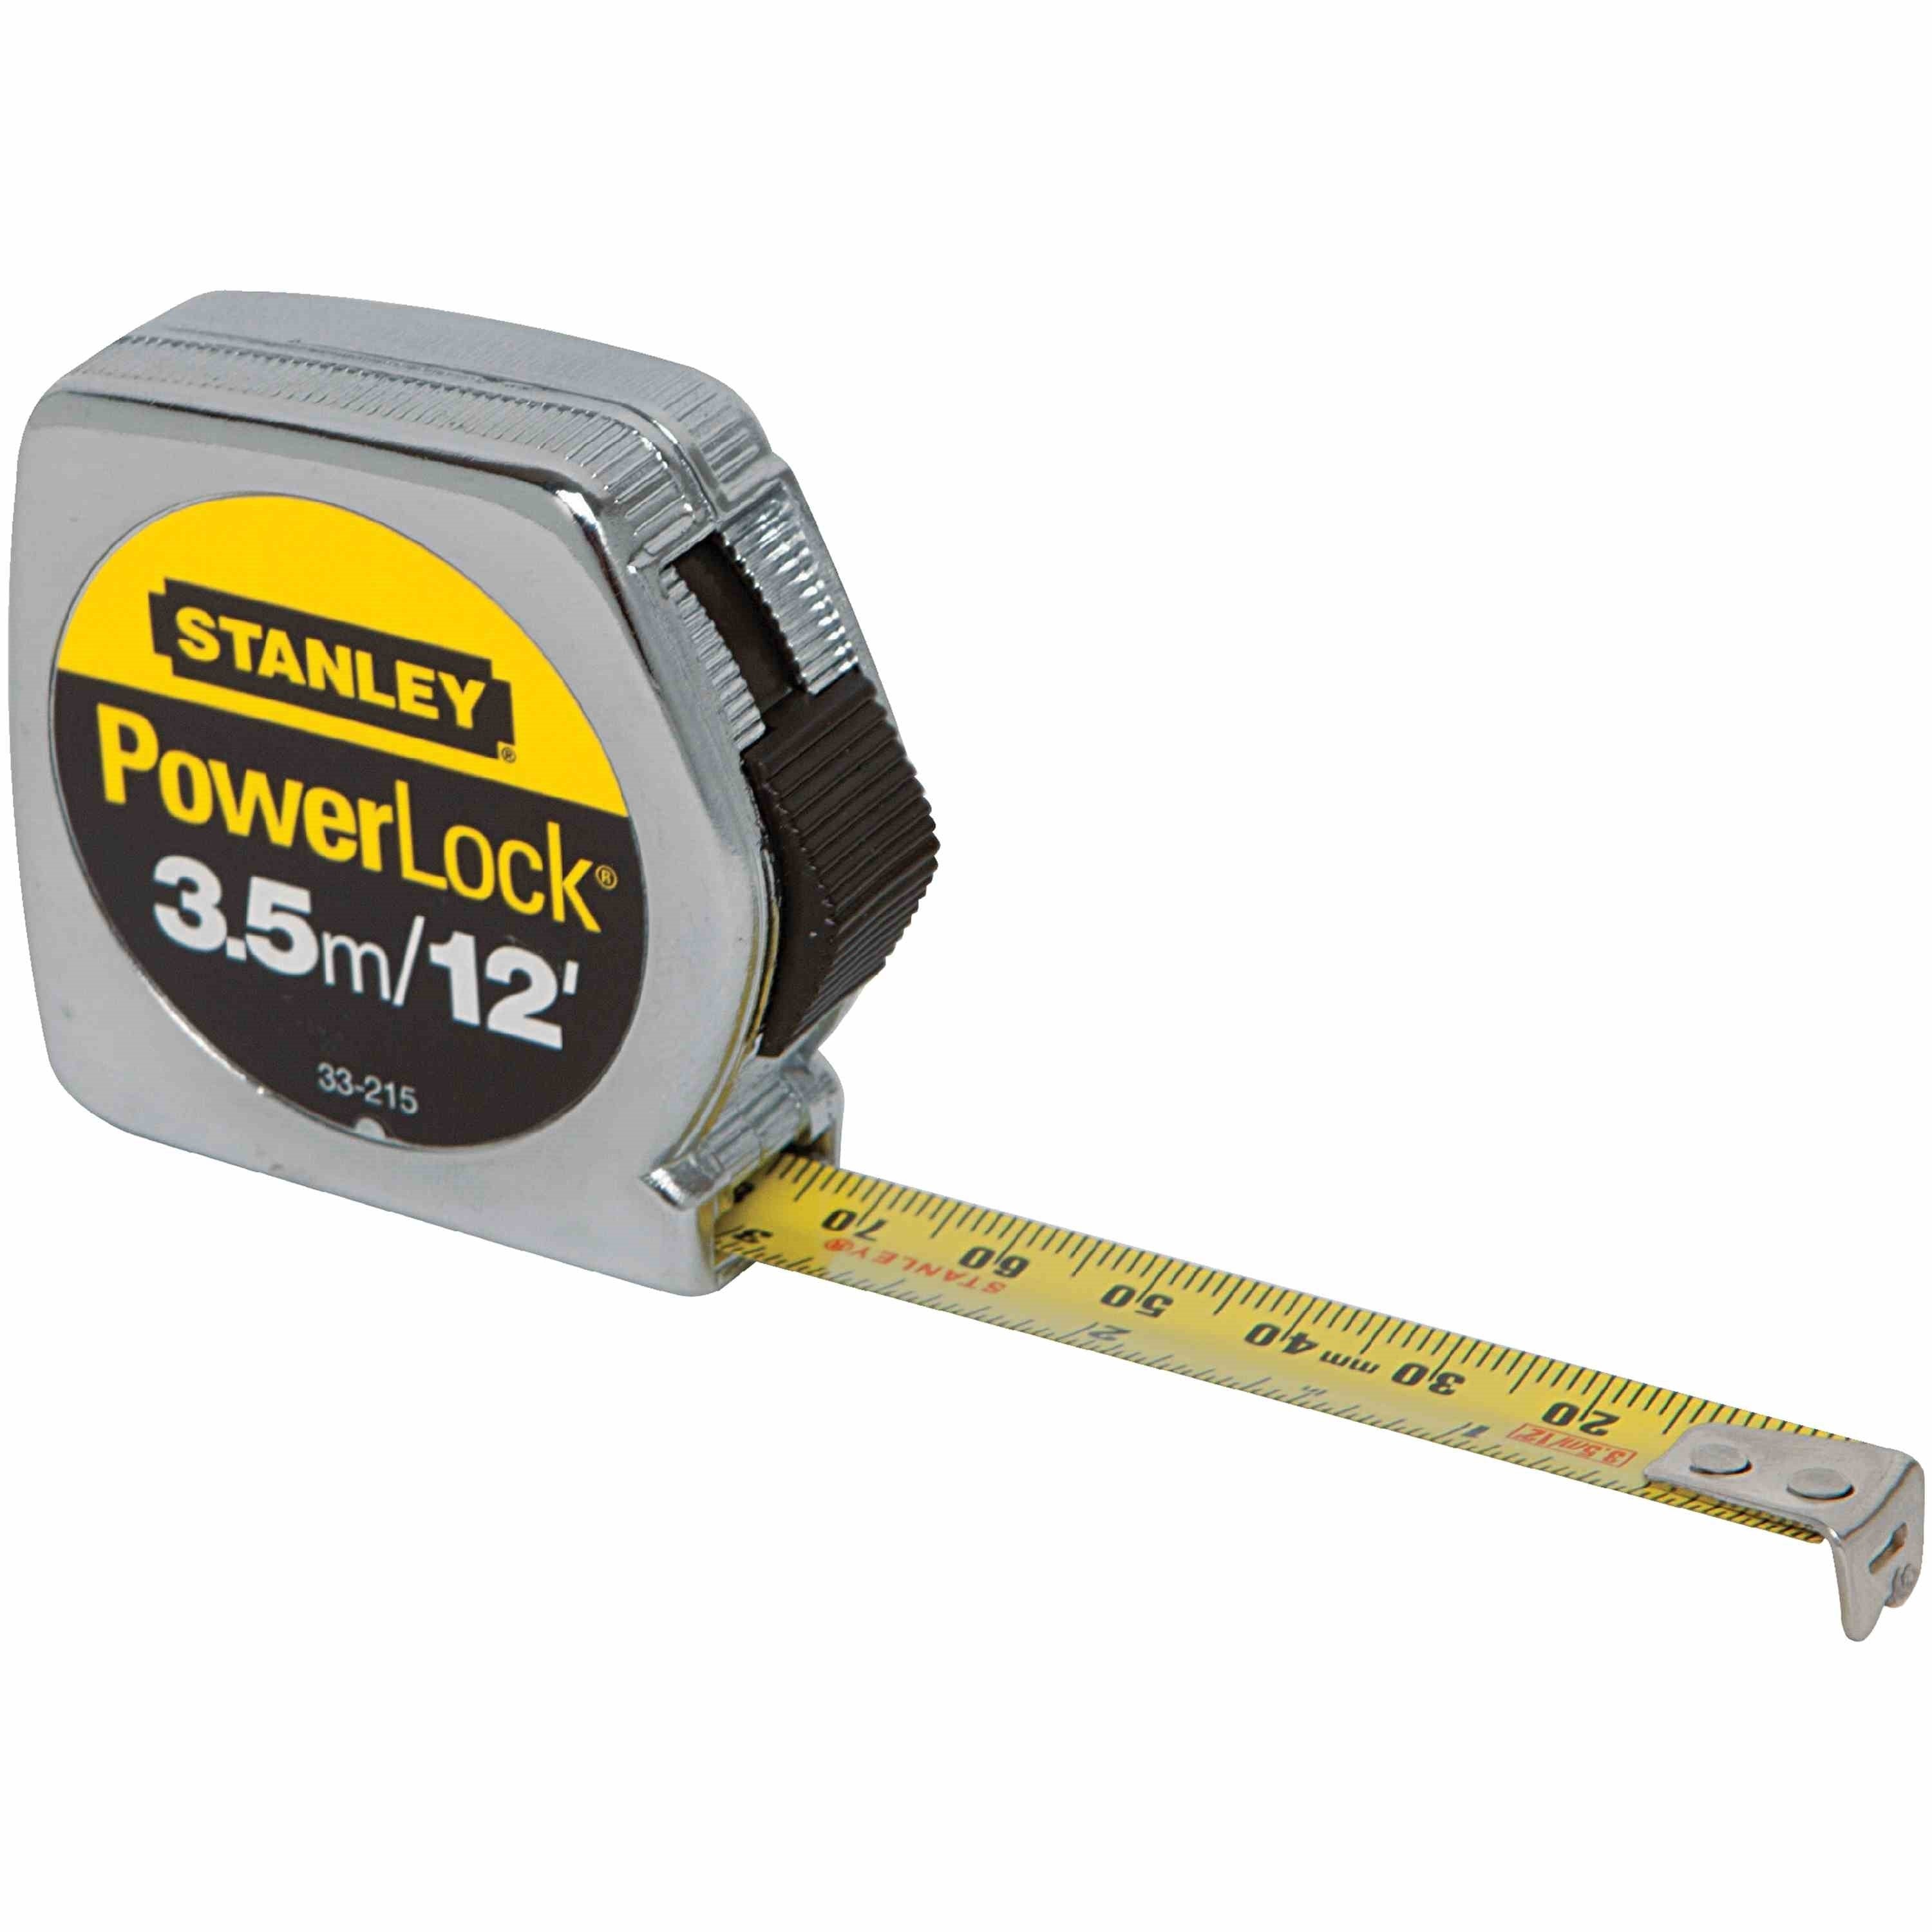 STANLEY  33-215  -  3.5M/12 FT POWERLOCK® TAPE MEASURE